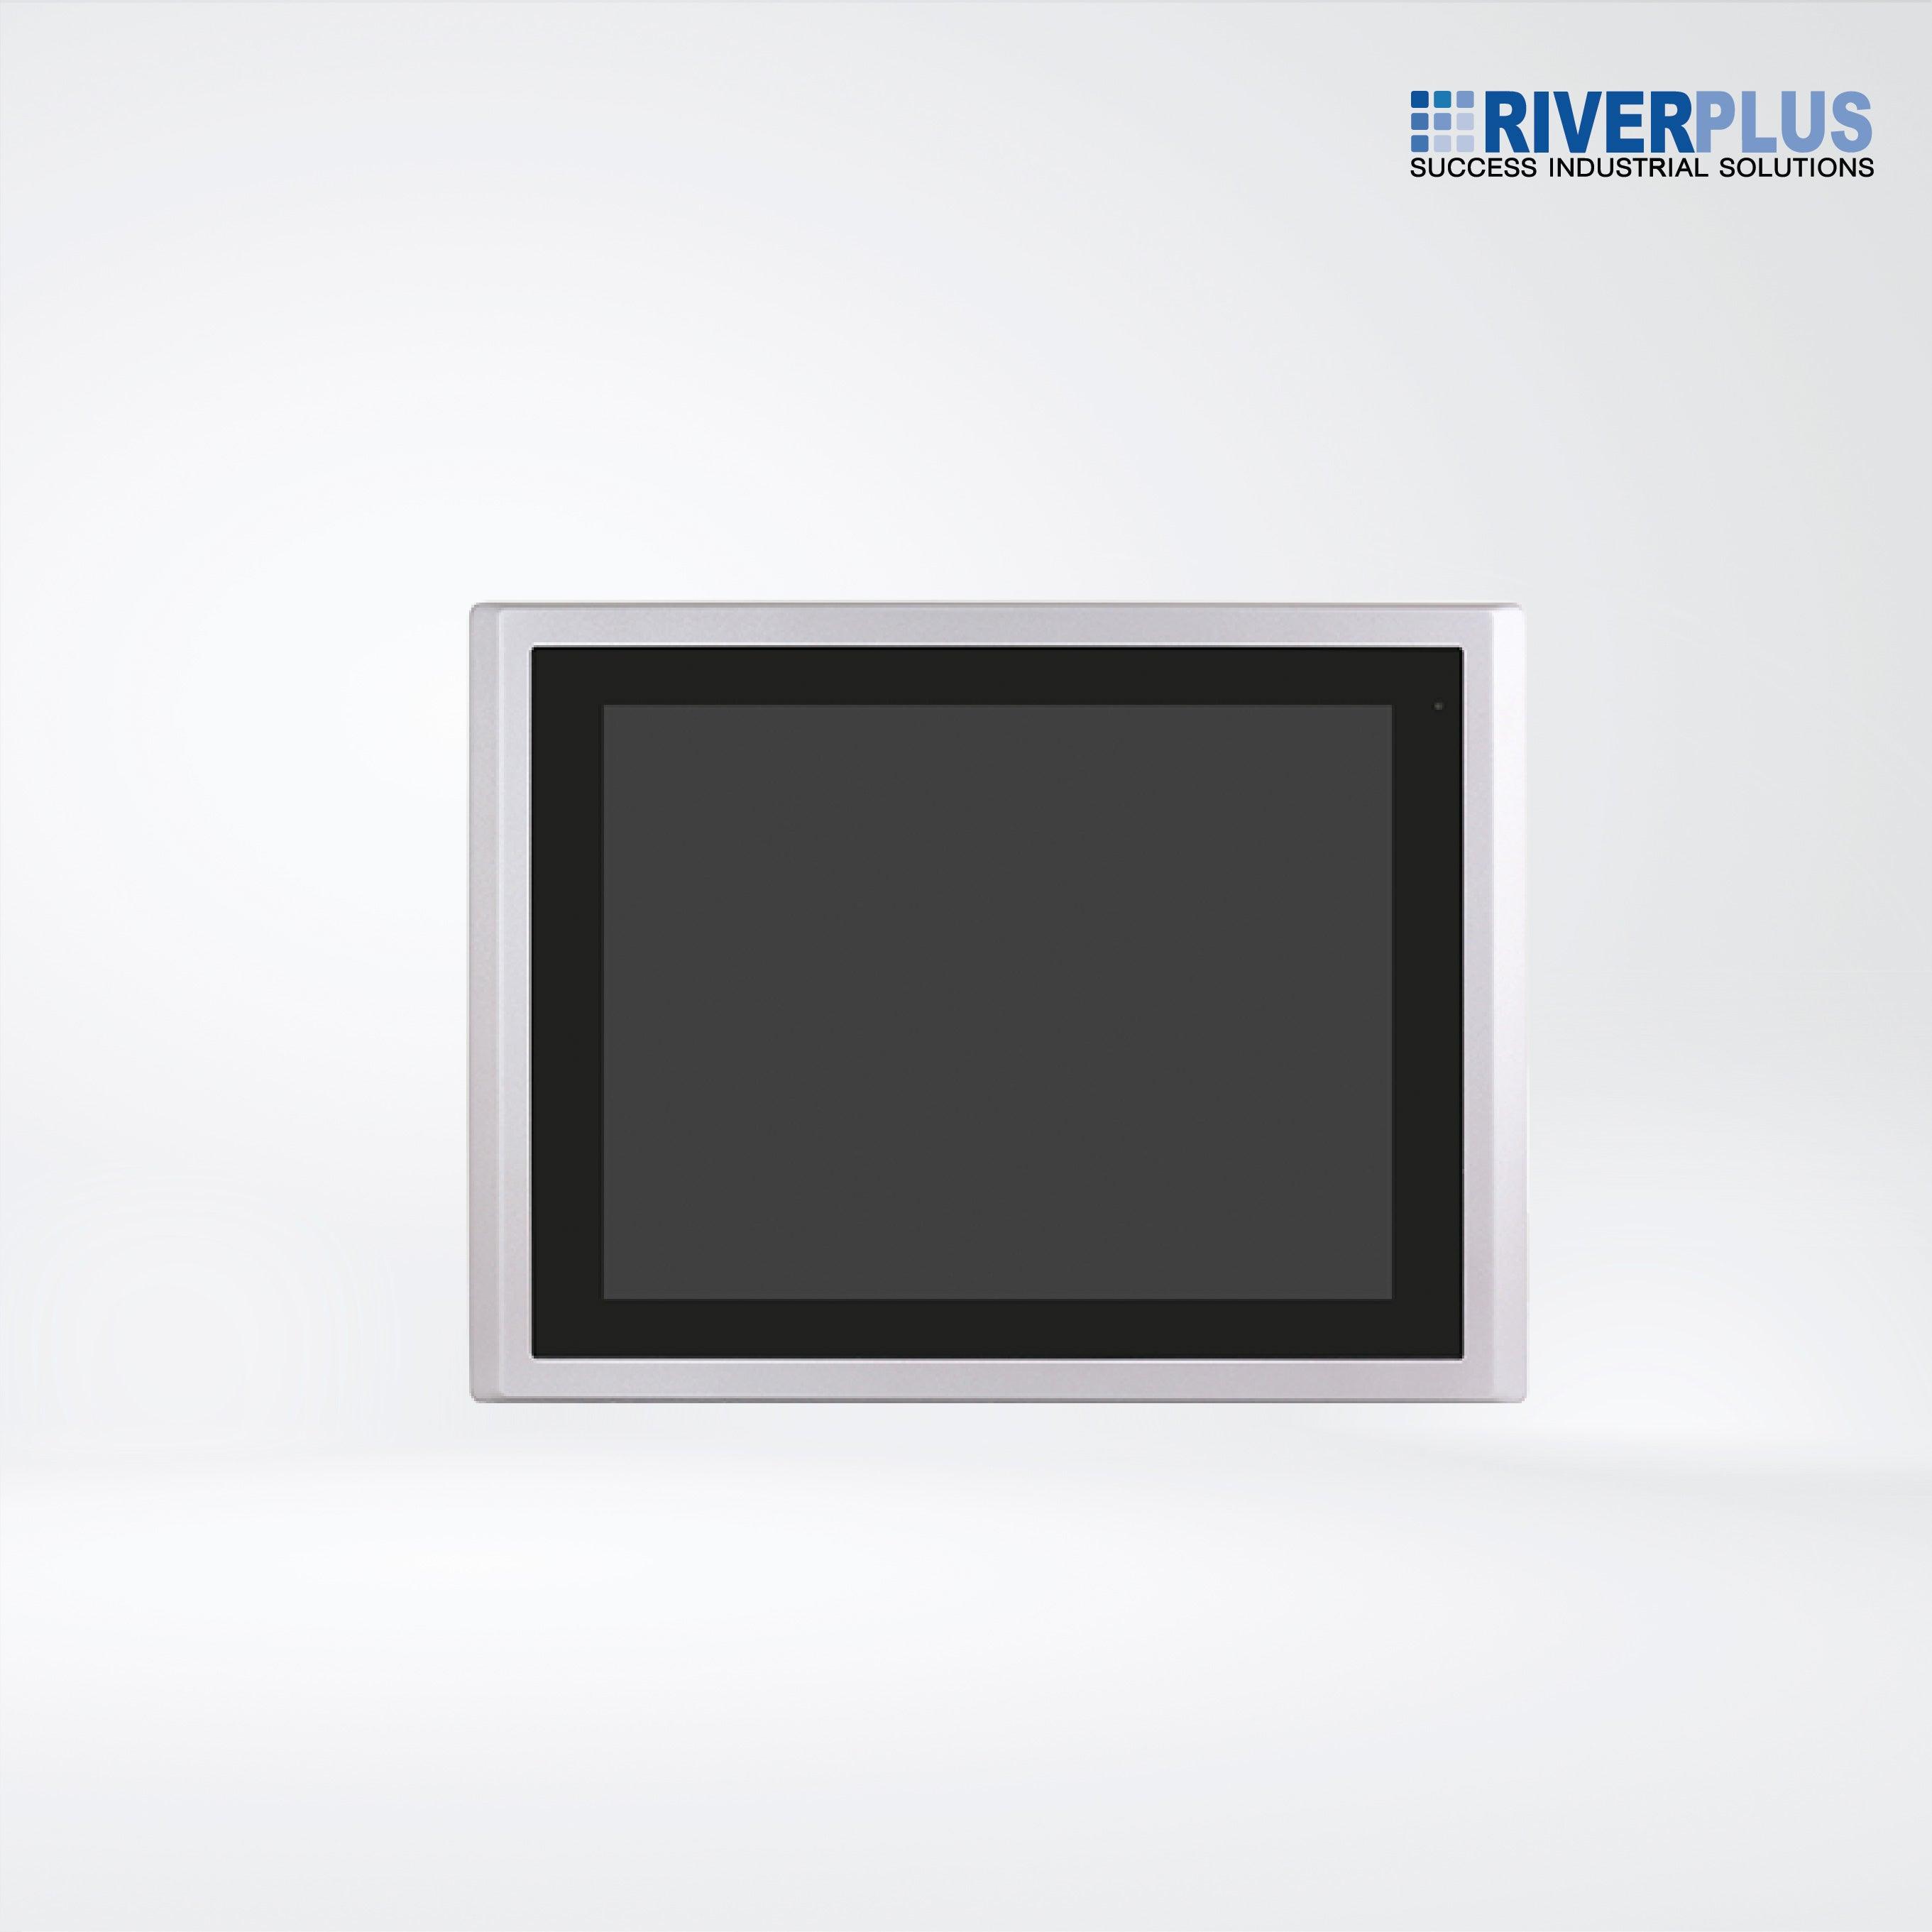 ViPAC-815R 15” Intel Celeron N2930 Fanless Expandable Panel PC - Riverplus